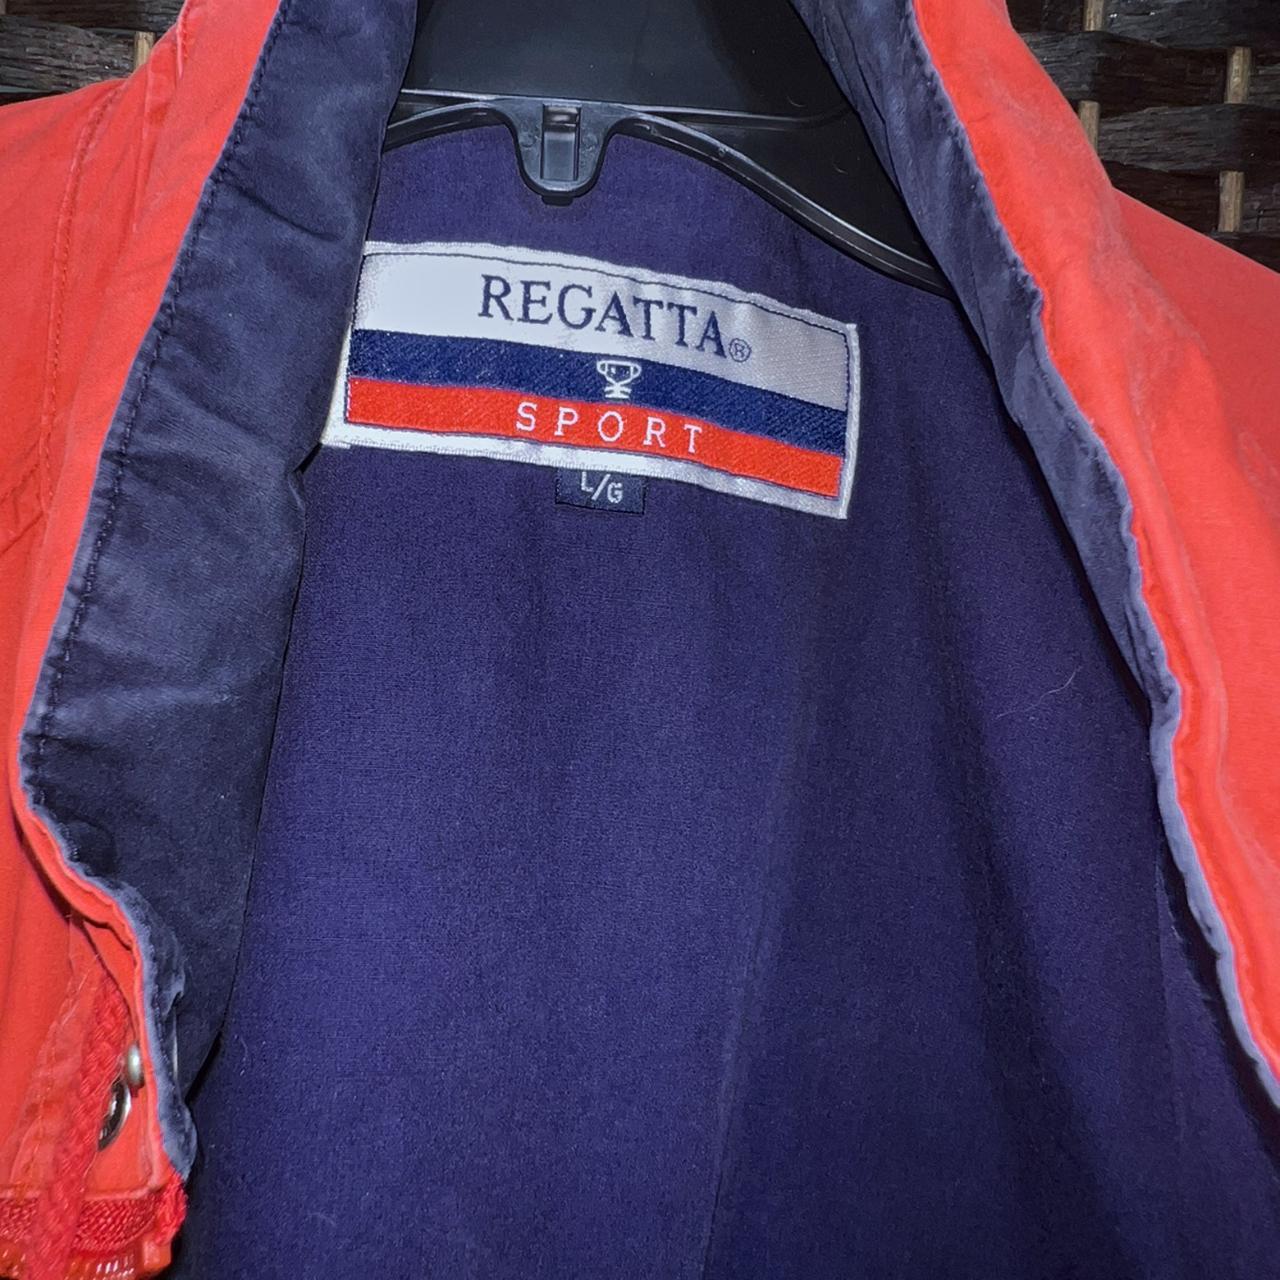 Regatta Men's Blue and Red Jacket (4)